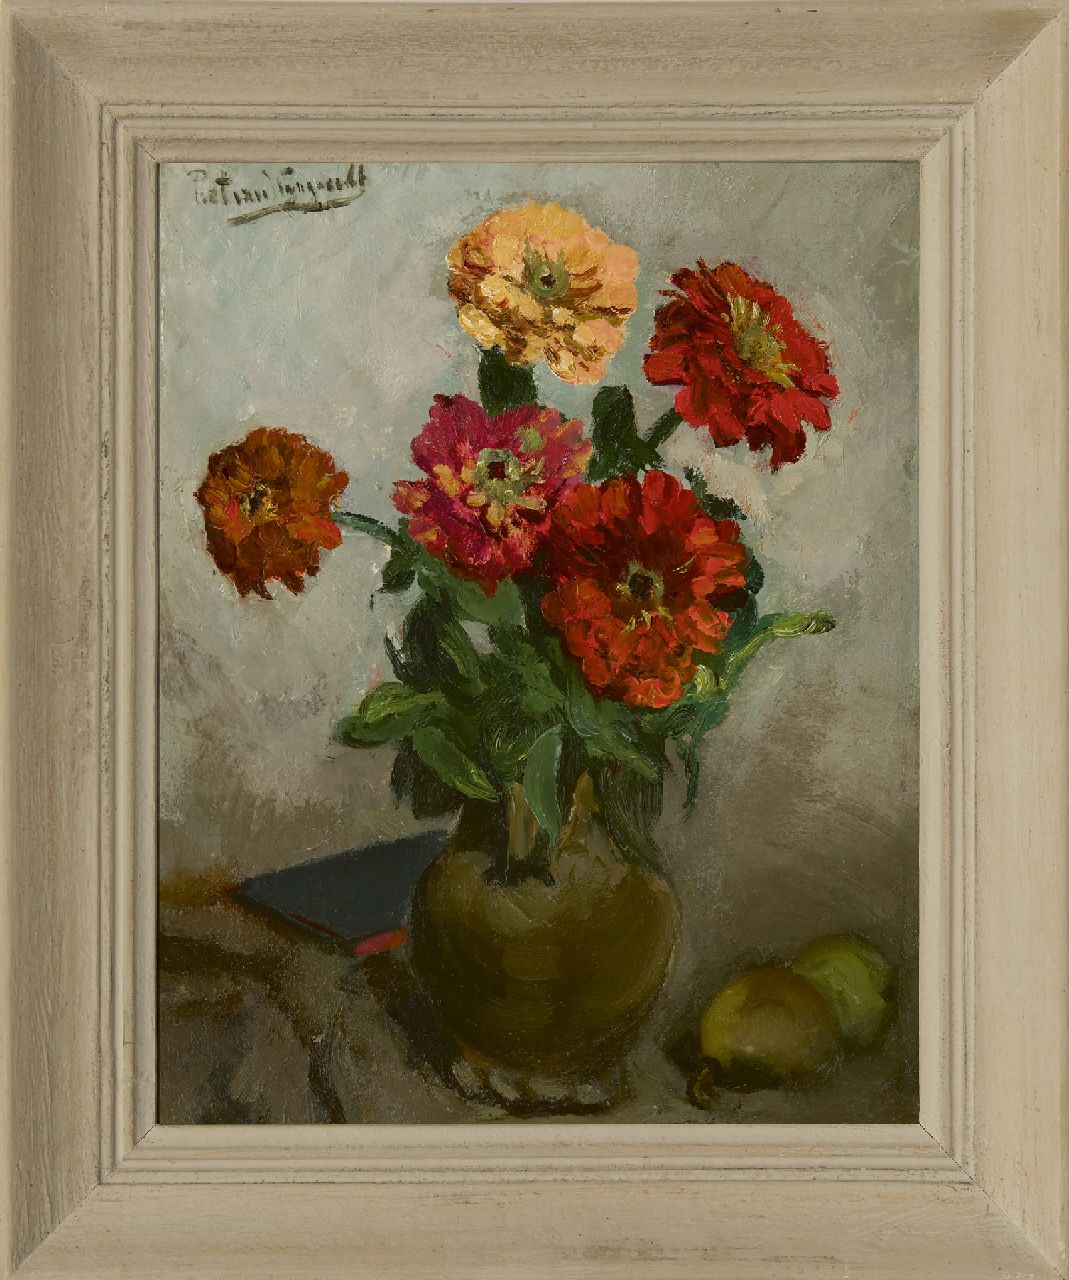 Wijngaerdt P.T. van | Petrus Theodorus 'Piet' van Wijngaerdt | Paintings offered for sale | Zinnia's, oil on canvas 50.7 x 41.0 cm, signed u.l.